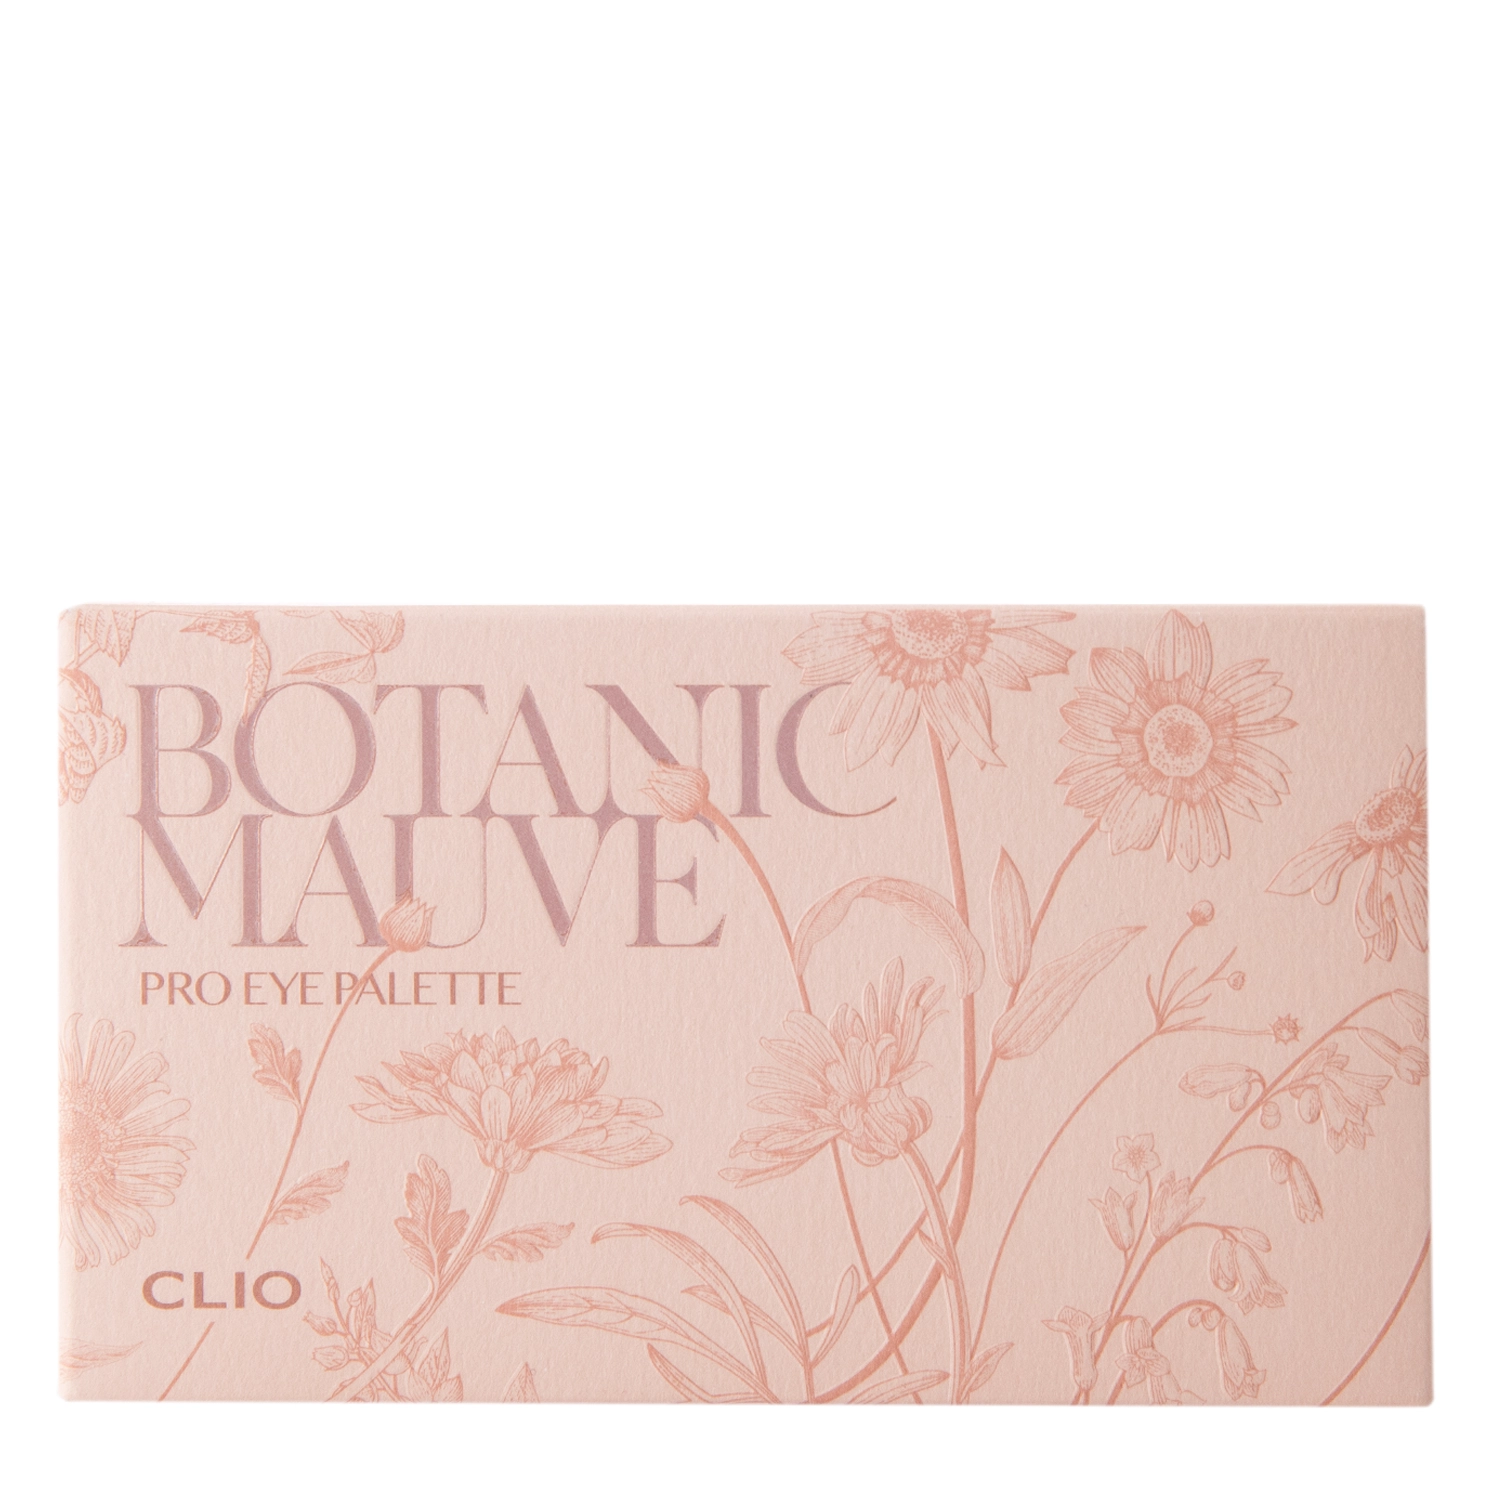 Clio – Pro Eye Palette – 09 Botanic Mauve